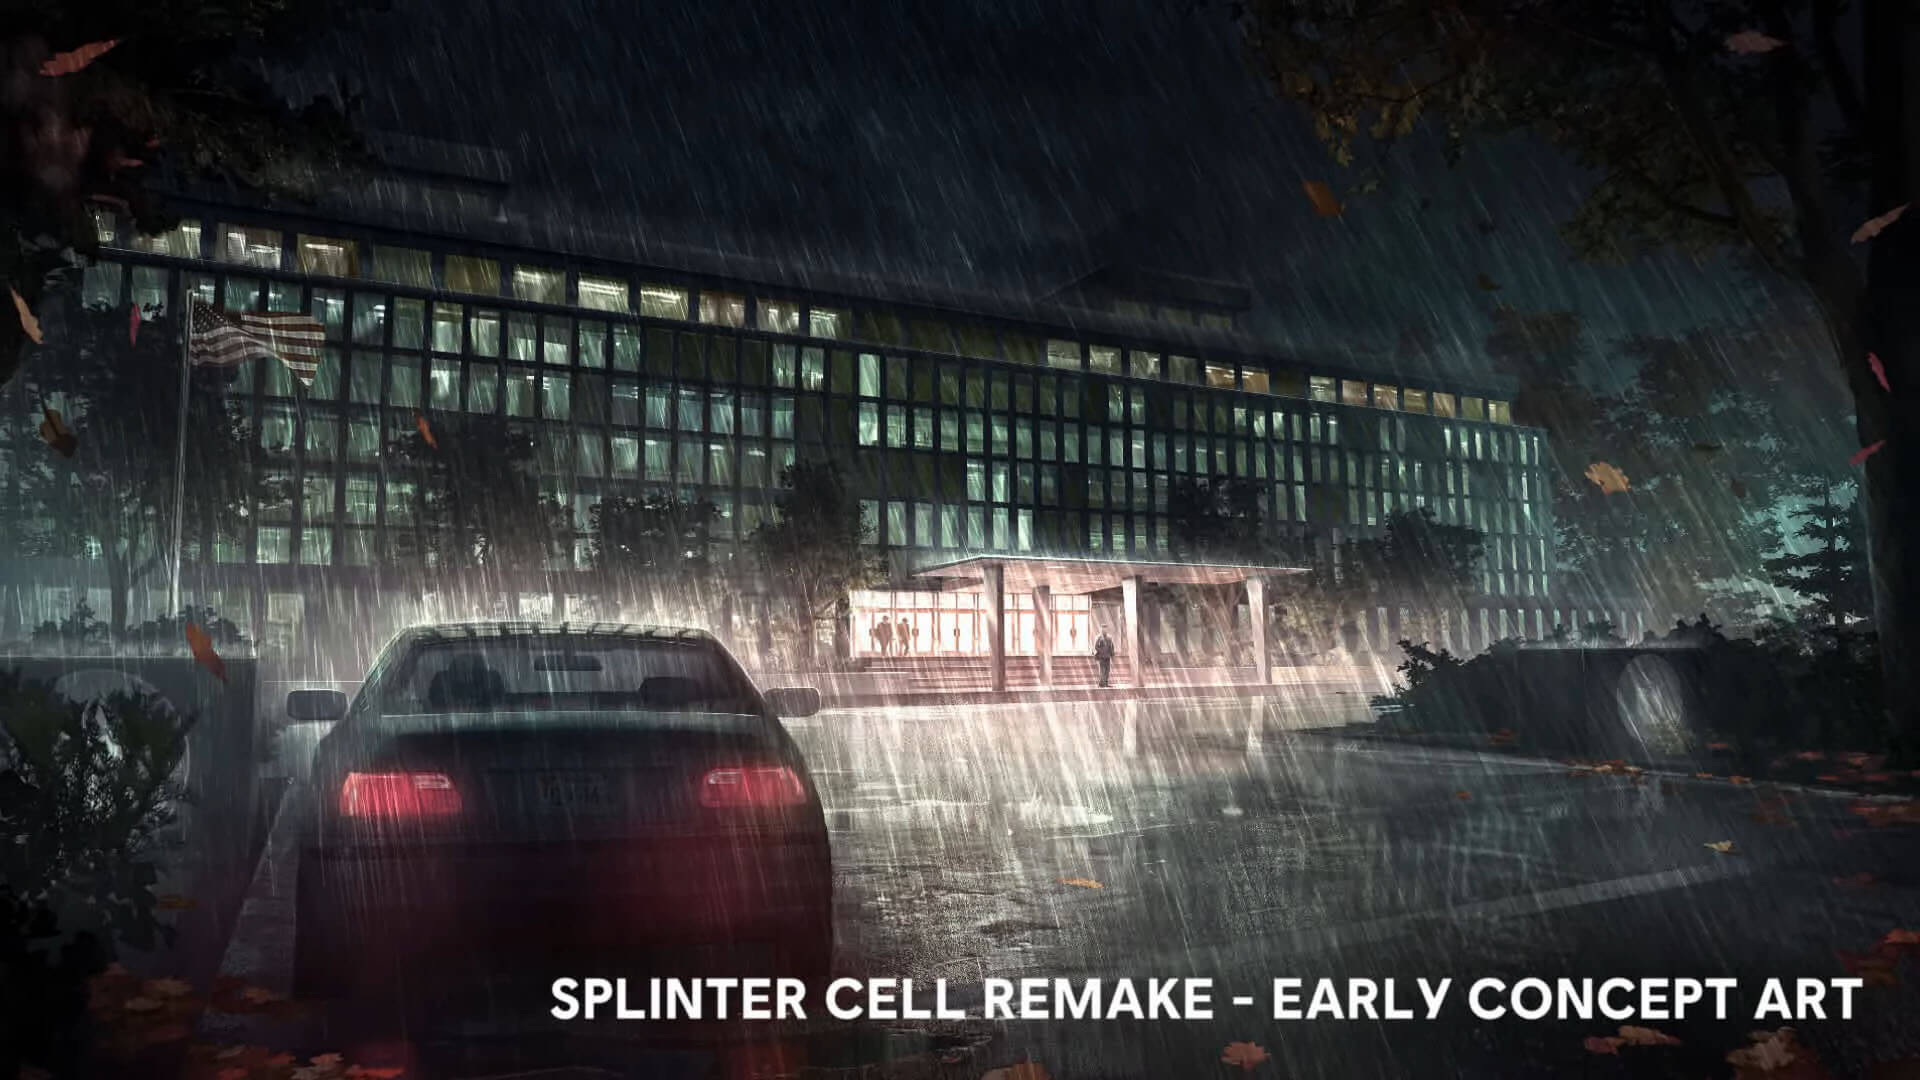 Splinter-Cell-Remake-concept-art-5.jpg